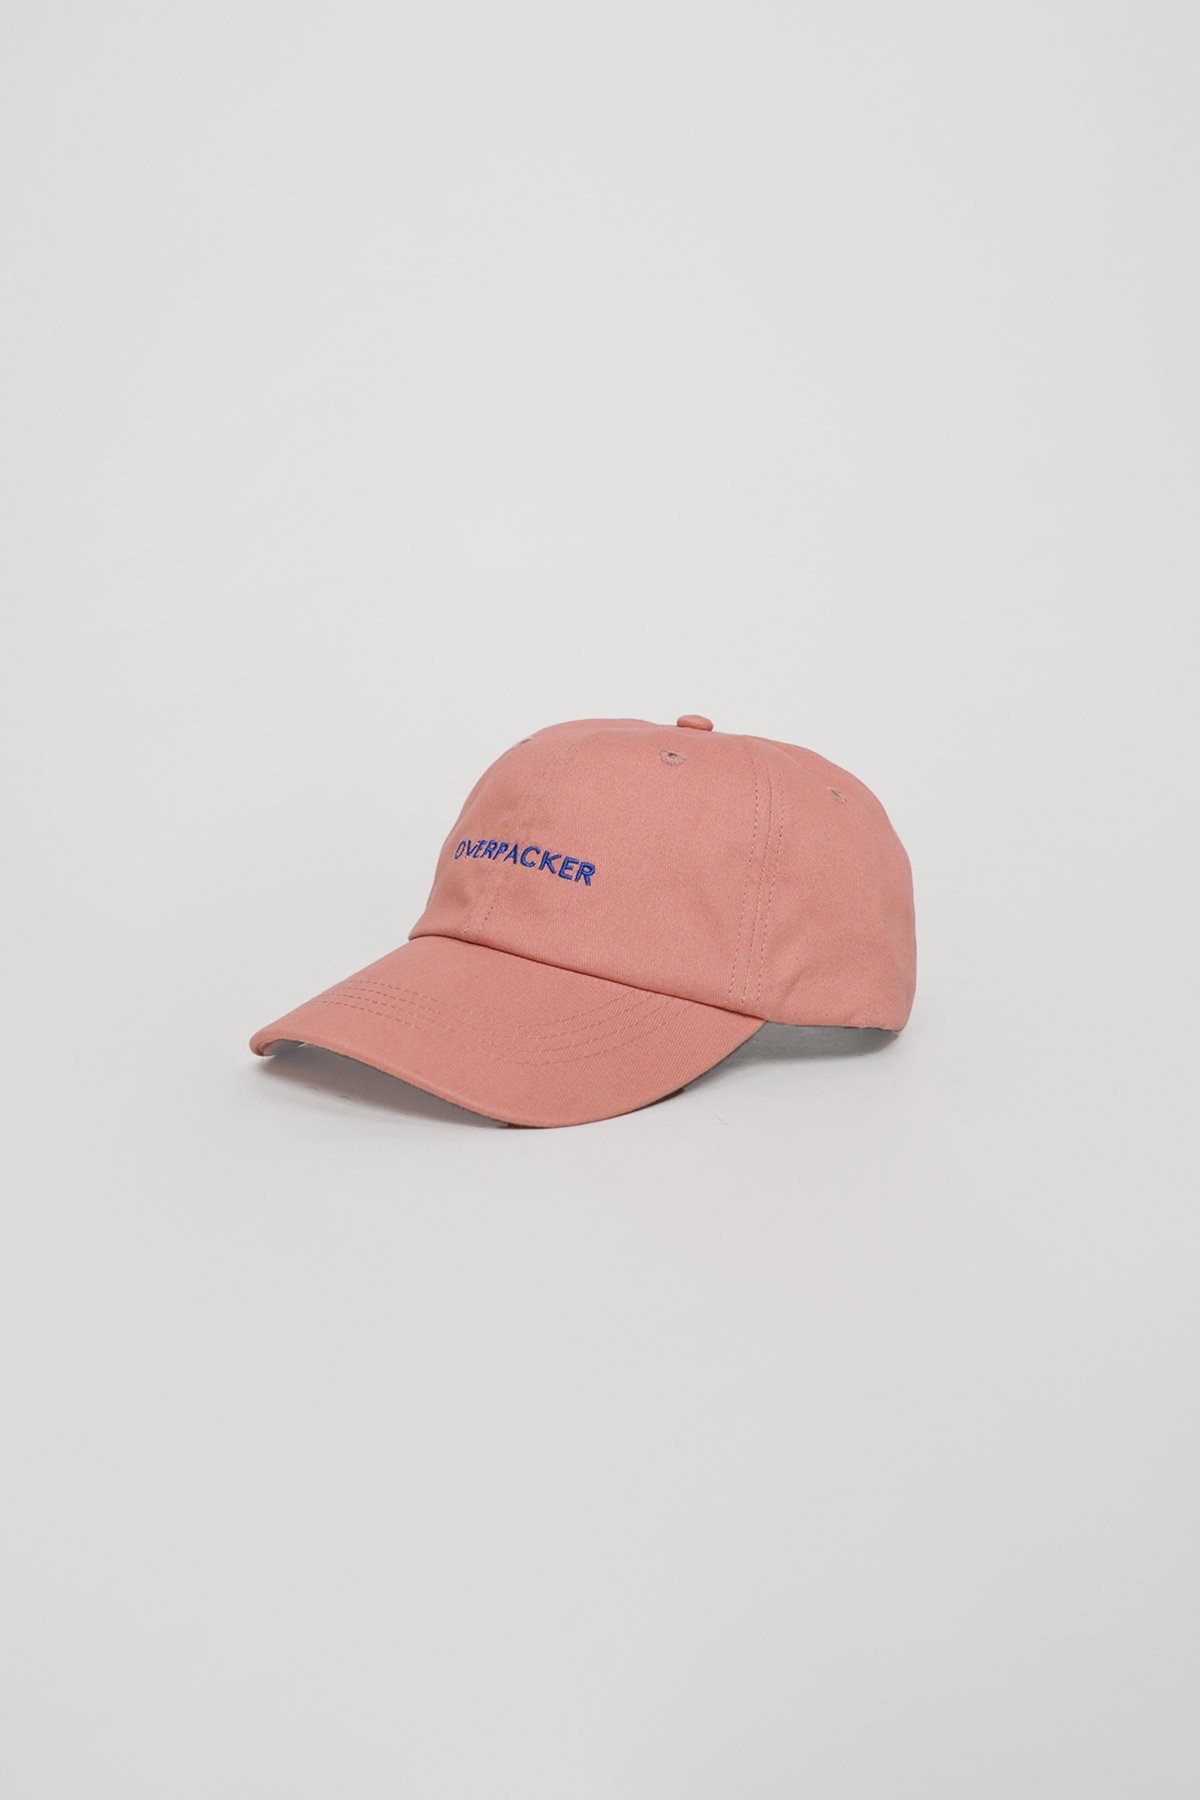 Overpacker Cap (Peach)